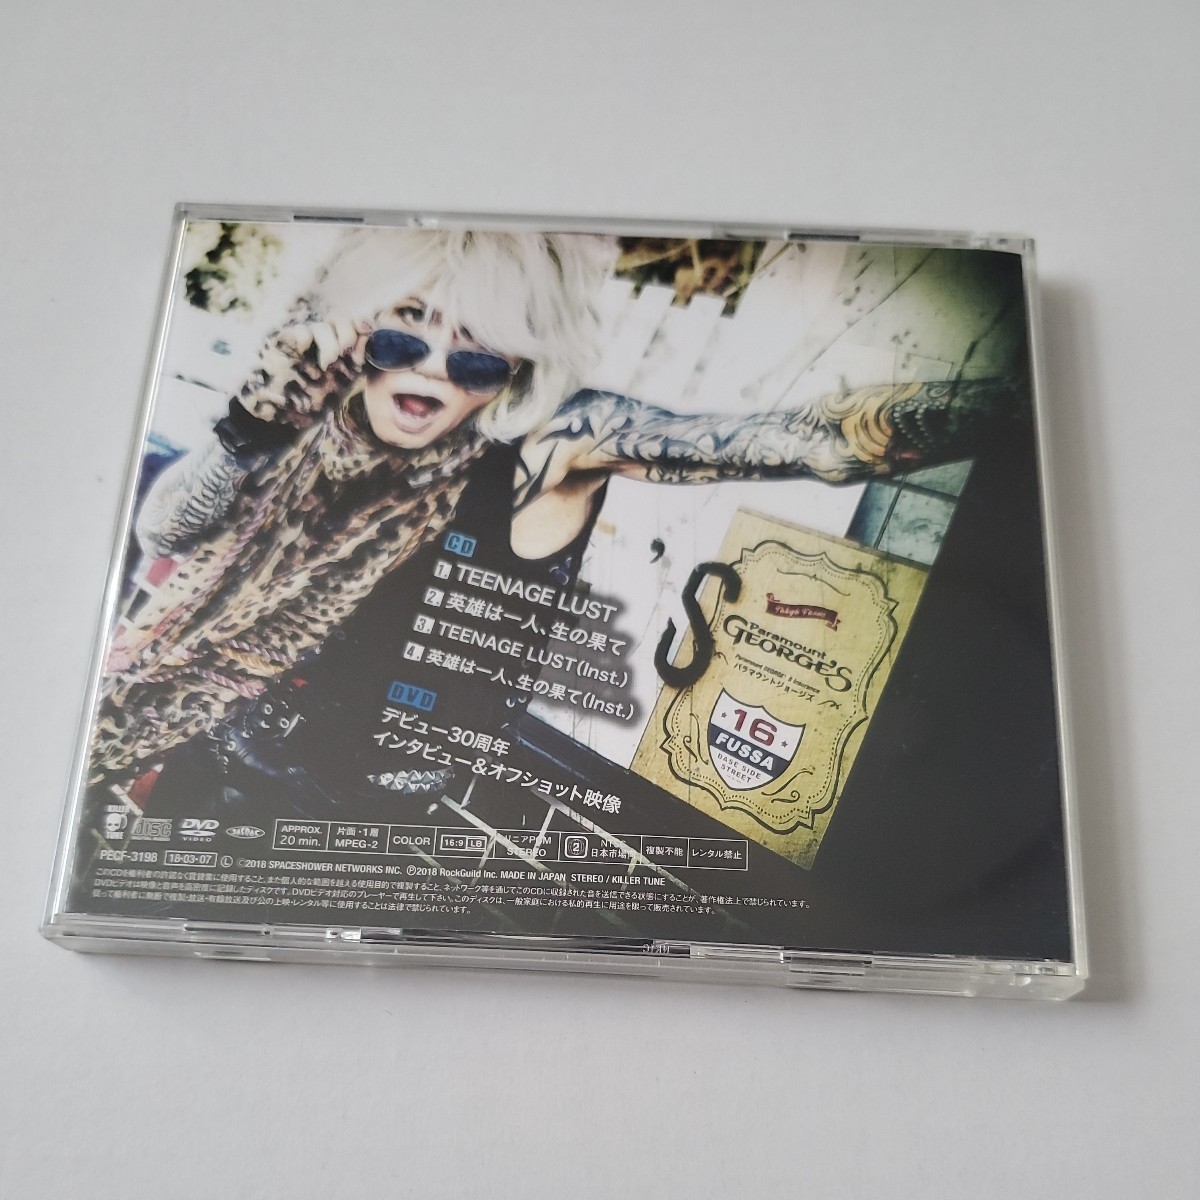 ZIGGY「TEENAGE LUST」CD+DVD_画像2